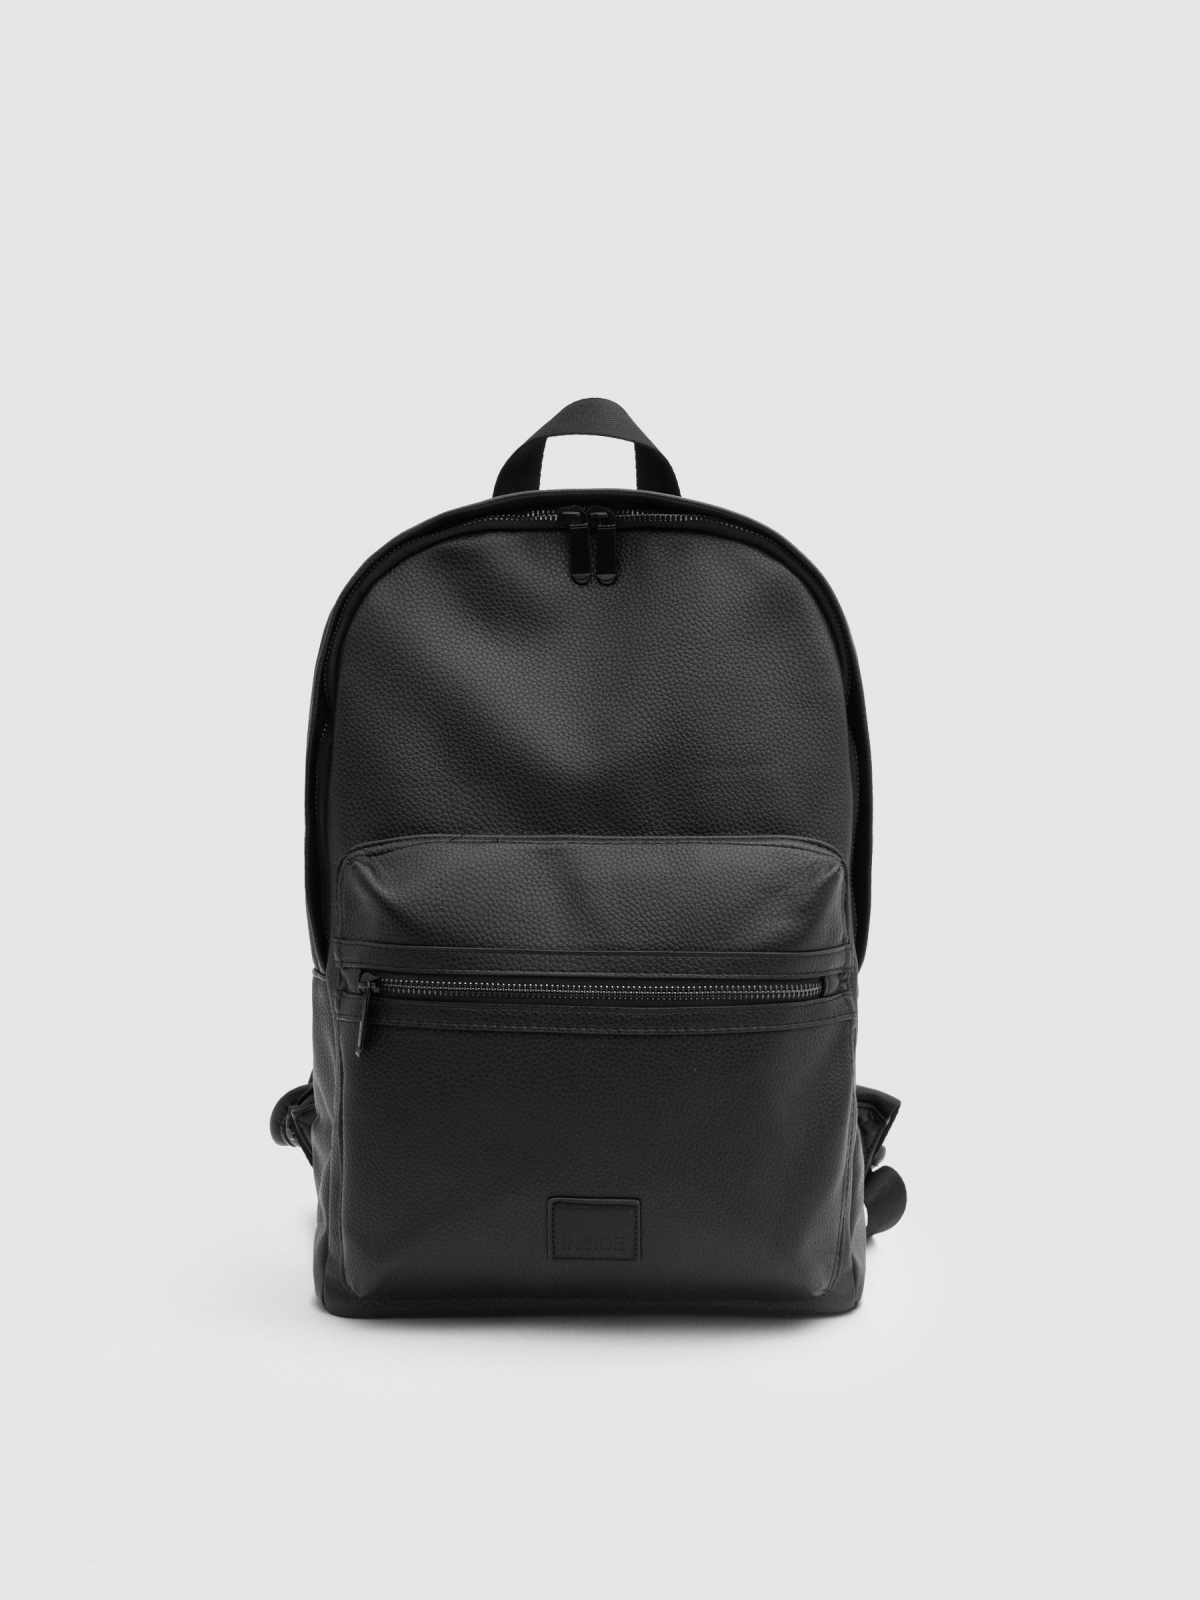 Basic black backpack black